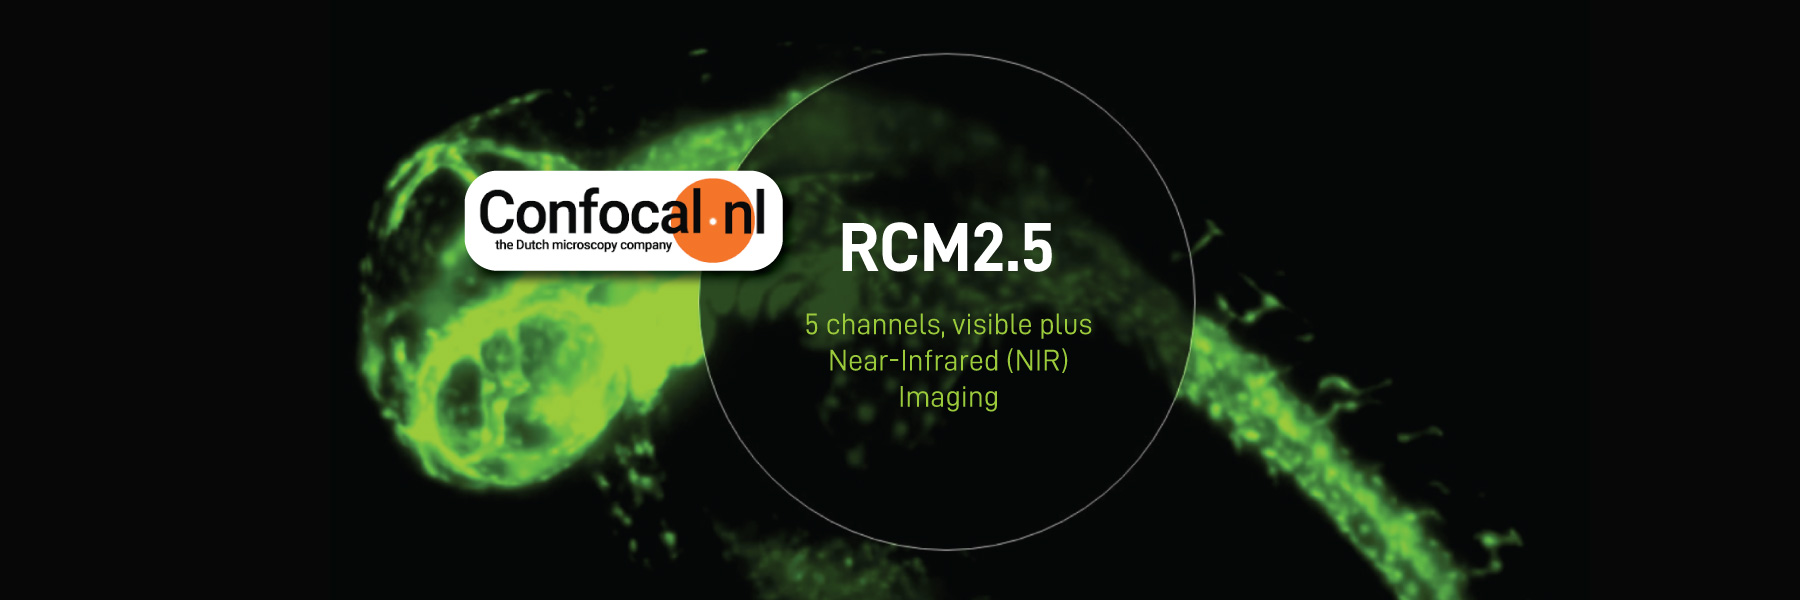 Confocal RCM2.5